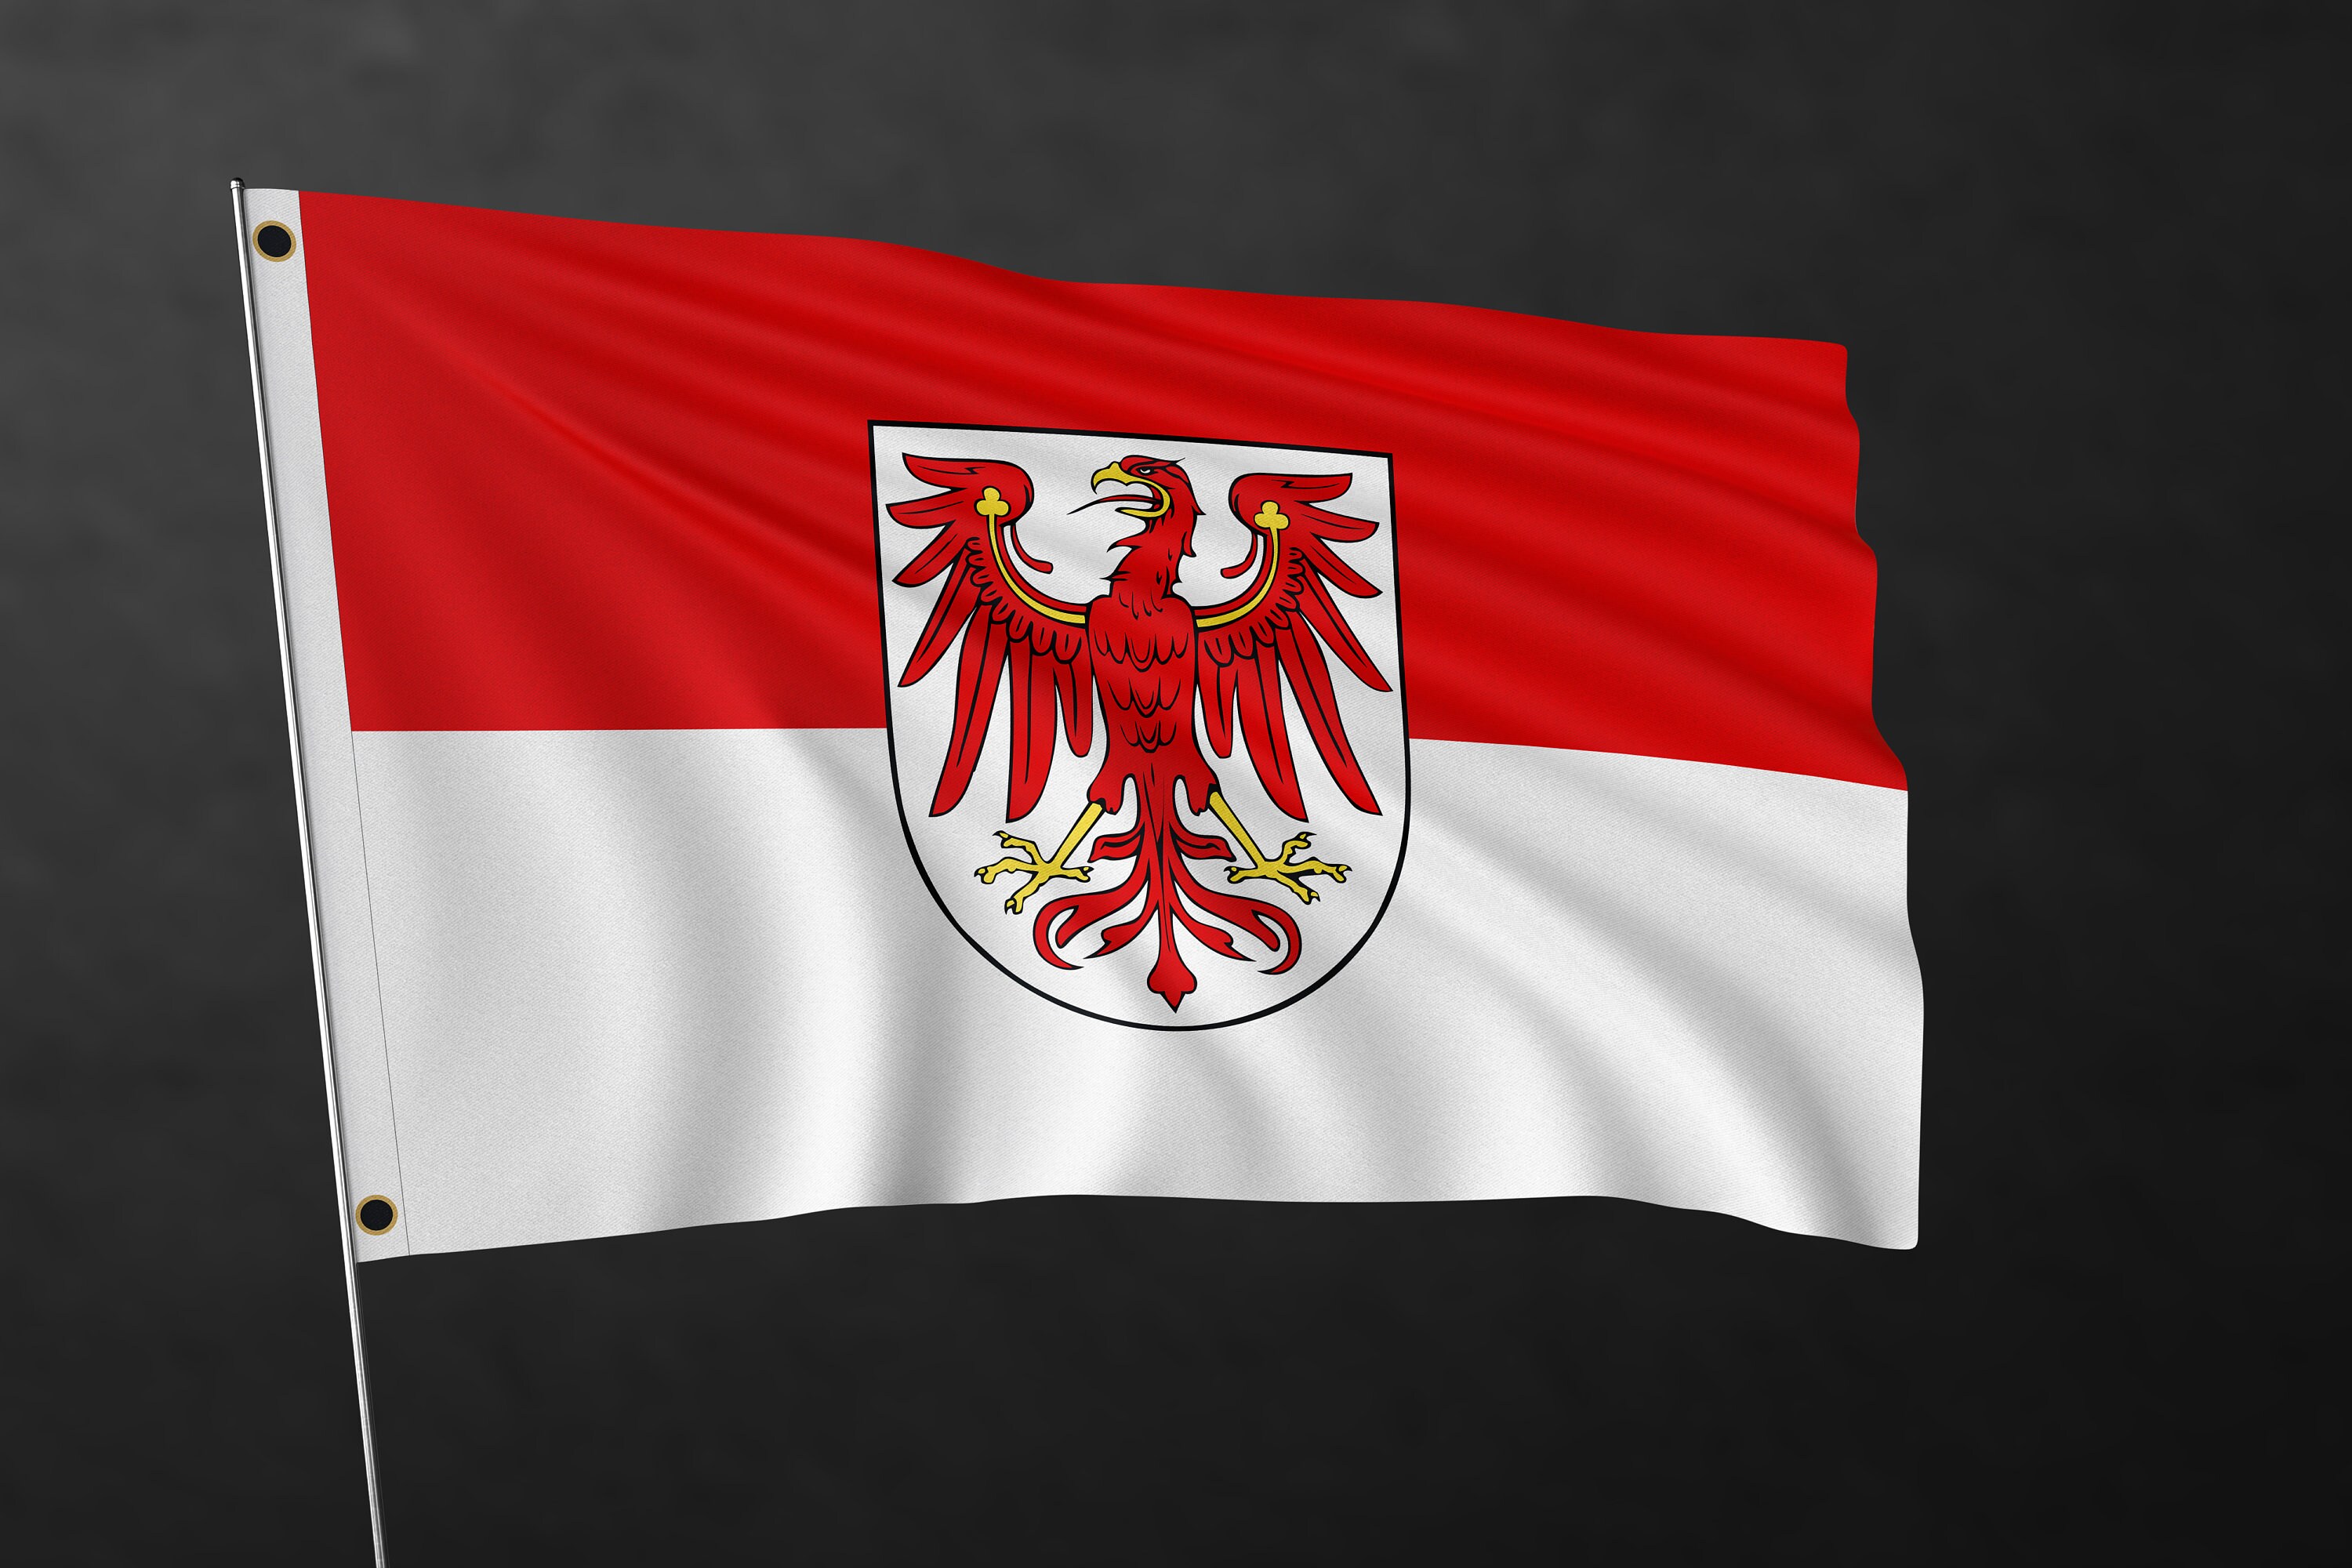 Brandenburg Flag Banner Germany Region Flags High Quality